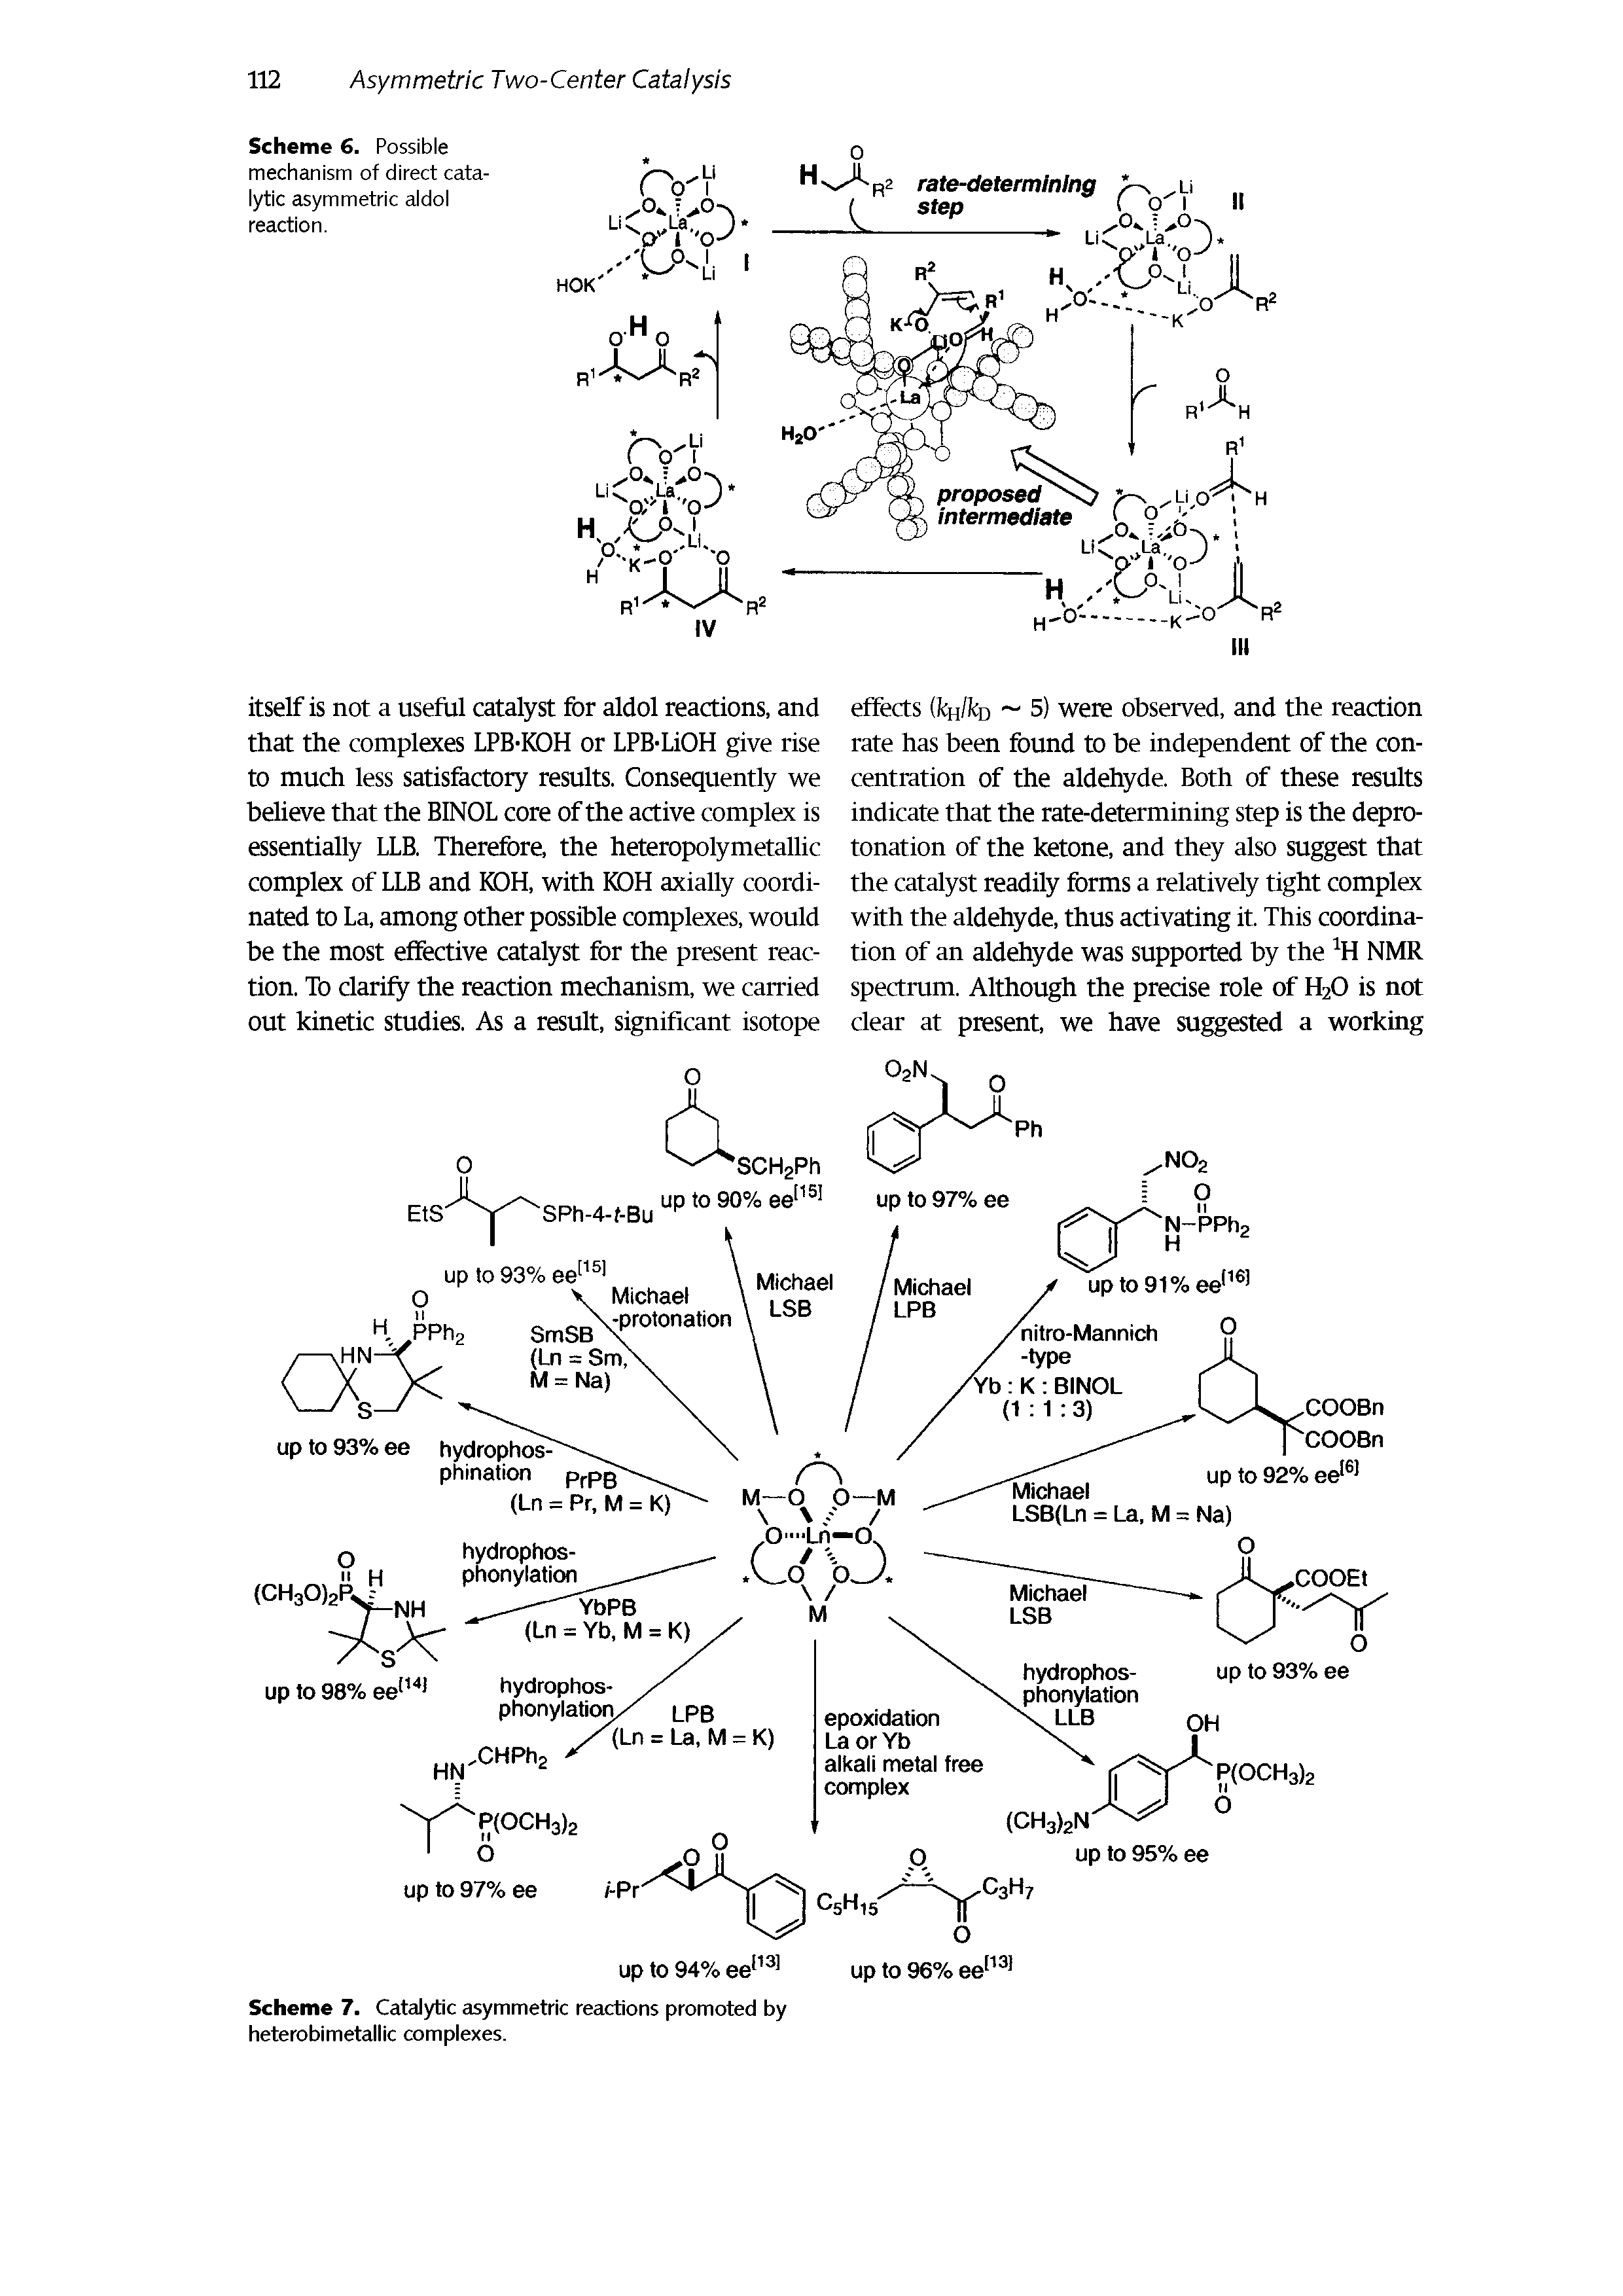 Scheme 6. Possible mechanism of direct catalytic asymmetric aldol reaction.